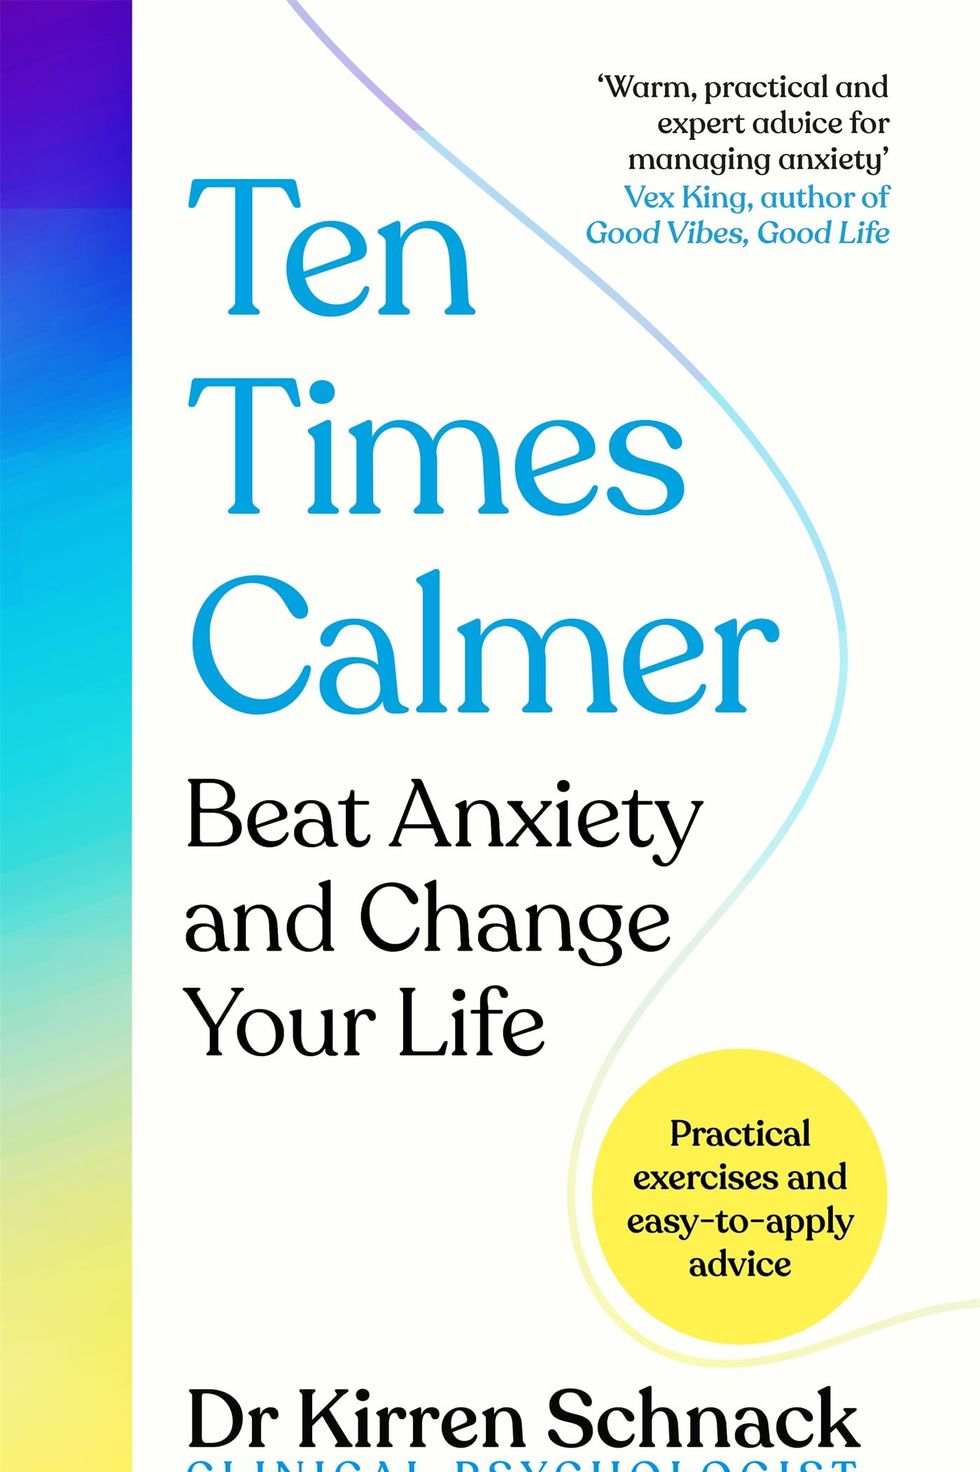 'Ten Times Calmer', Dr Kirren Schnack